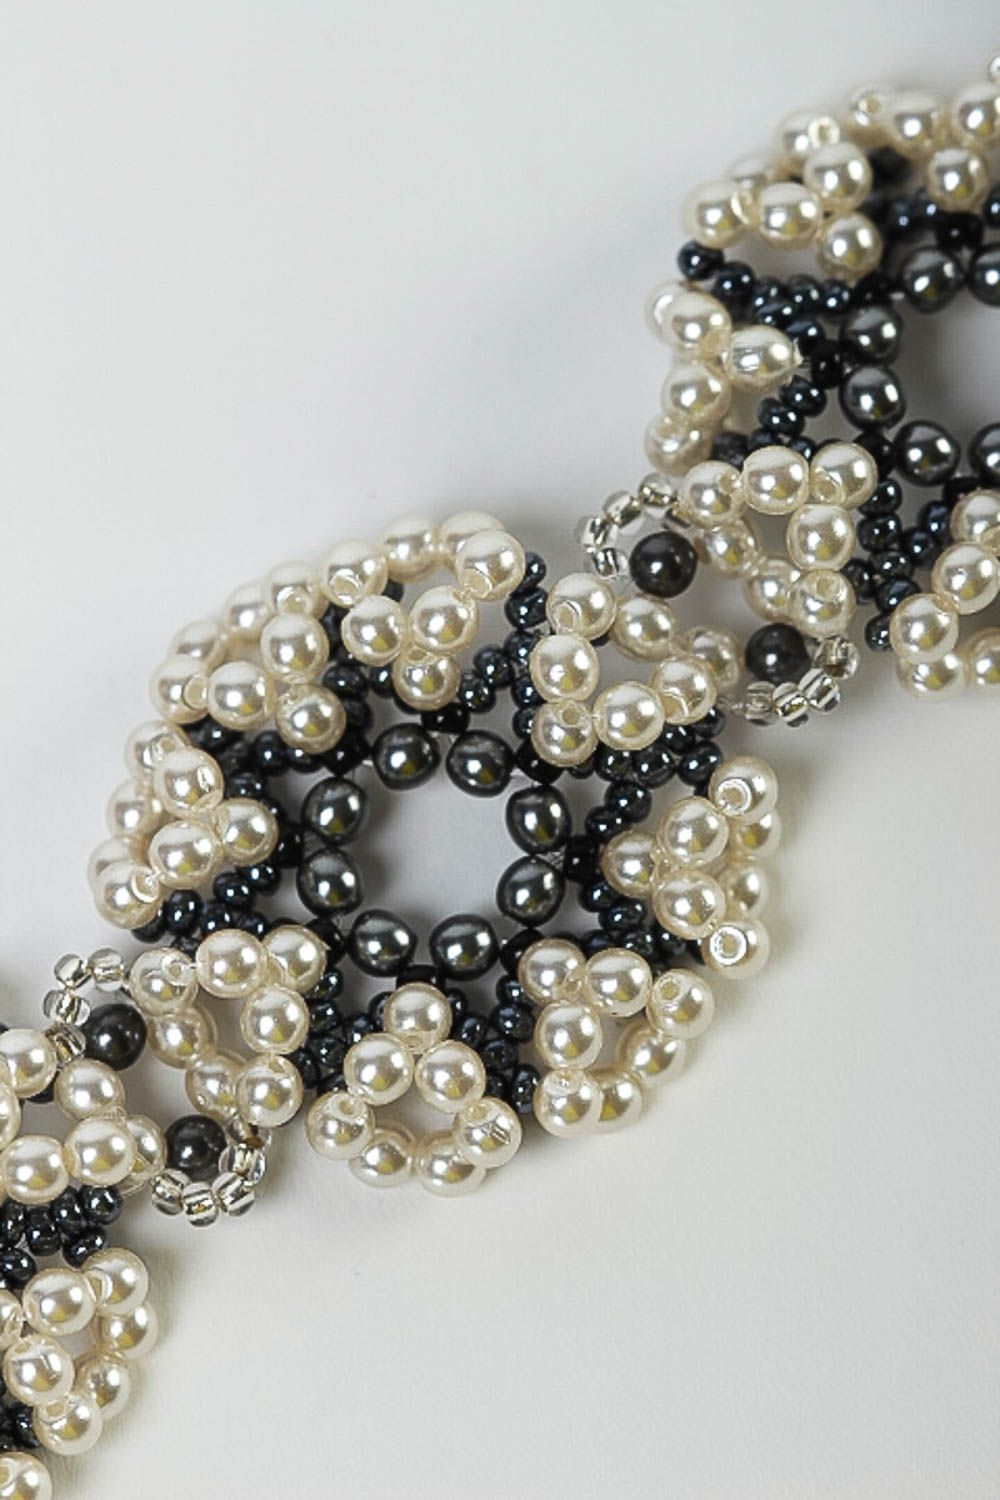 White and blue beads floral handmade bracelet for women photo 4